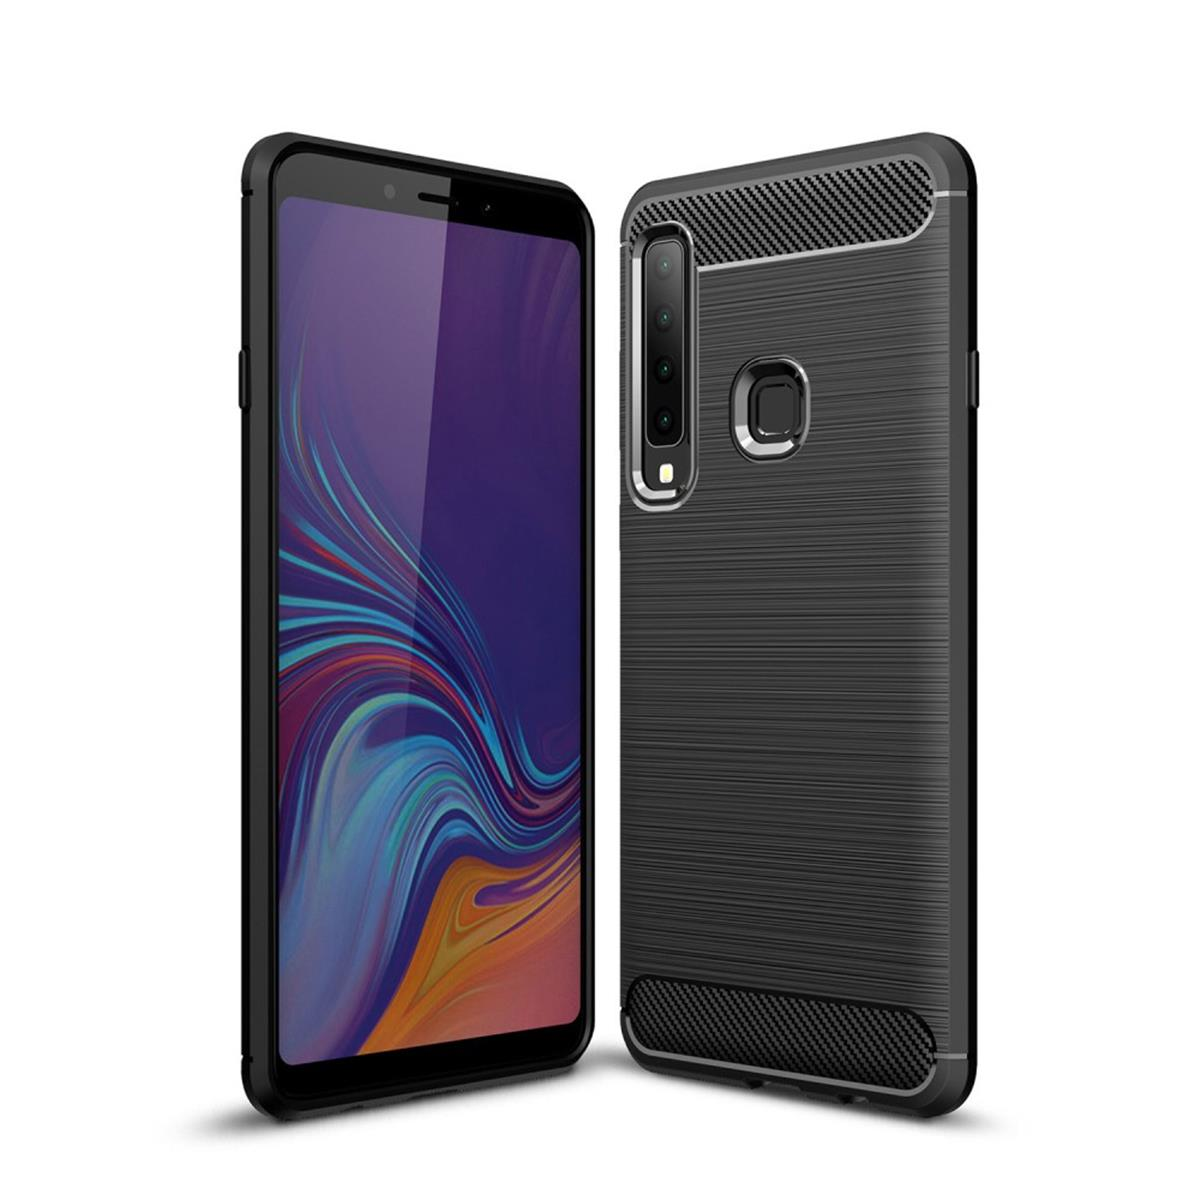 COVERKINGZ Handycase im Carbon Look, schwarz 2018, A9 Galaxy Samsung, Backcover